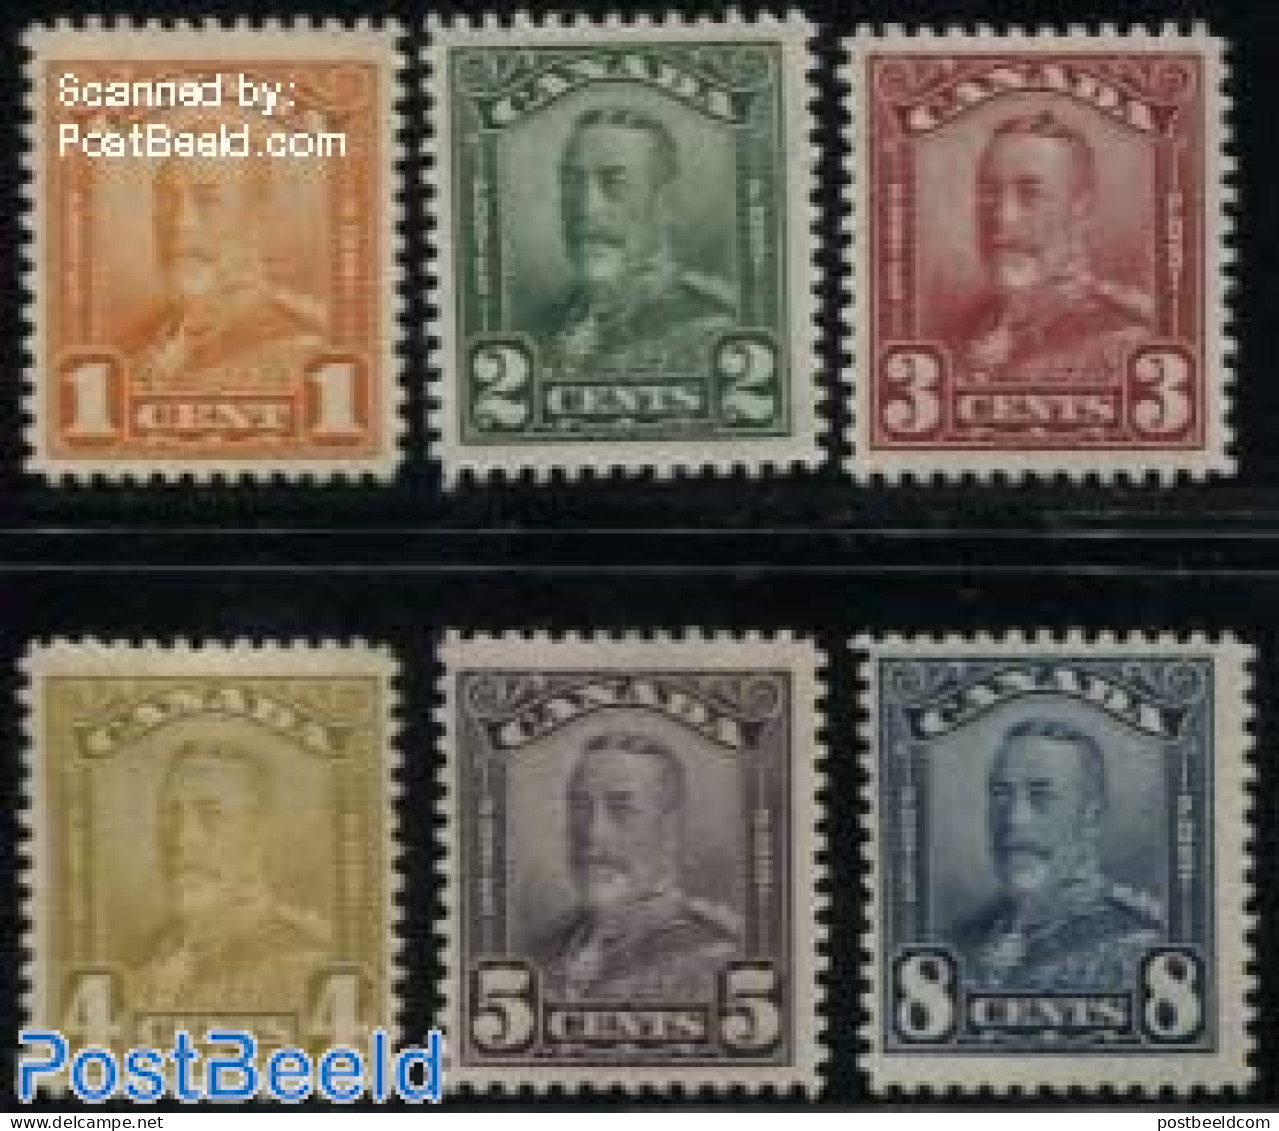 Canada 1928 Definitives 6v, Mint NH - Ongebruikt